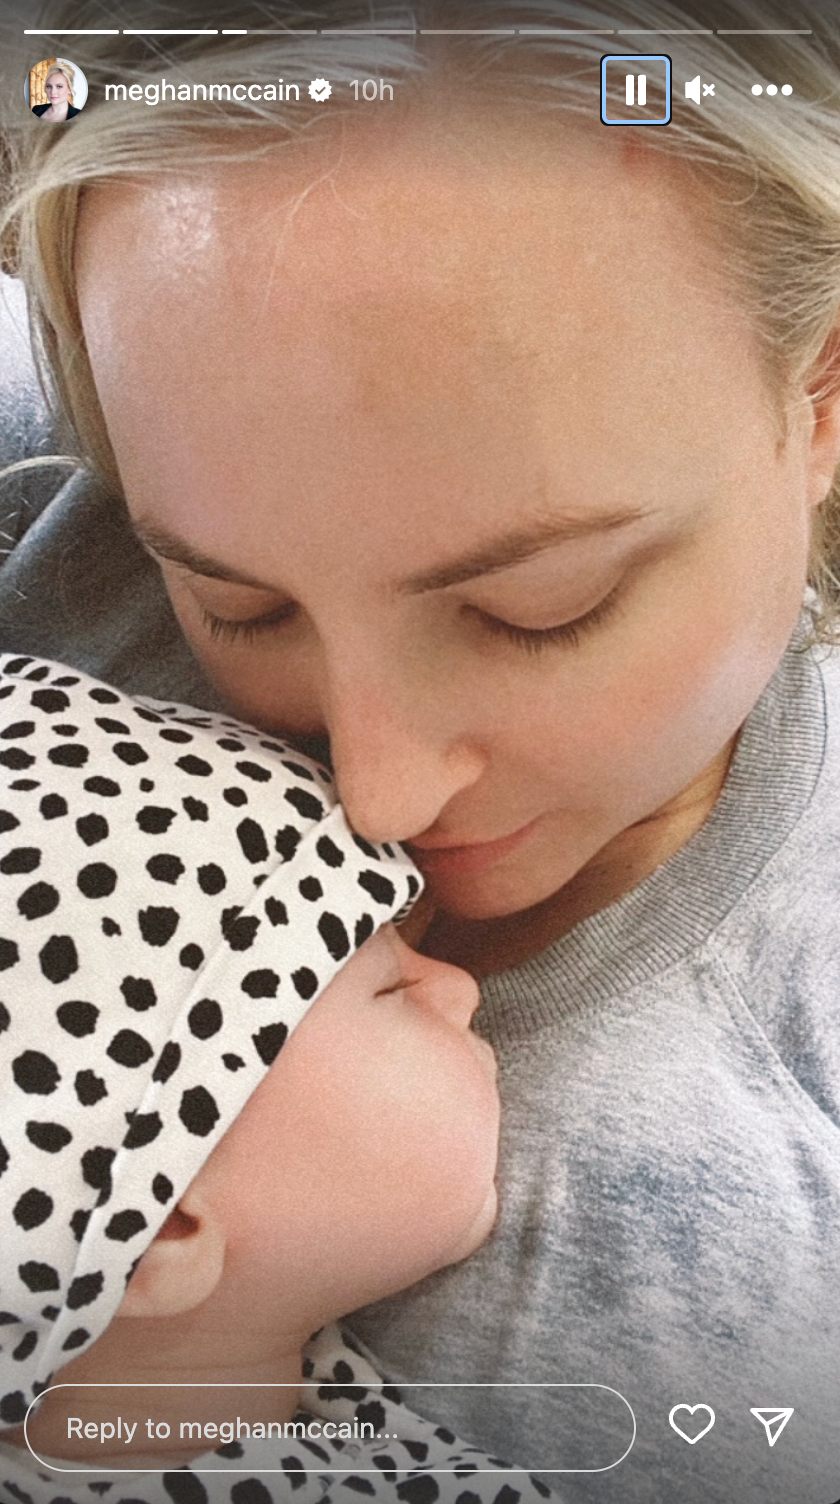 Meghan McCain bonds with newborn daughter